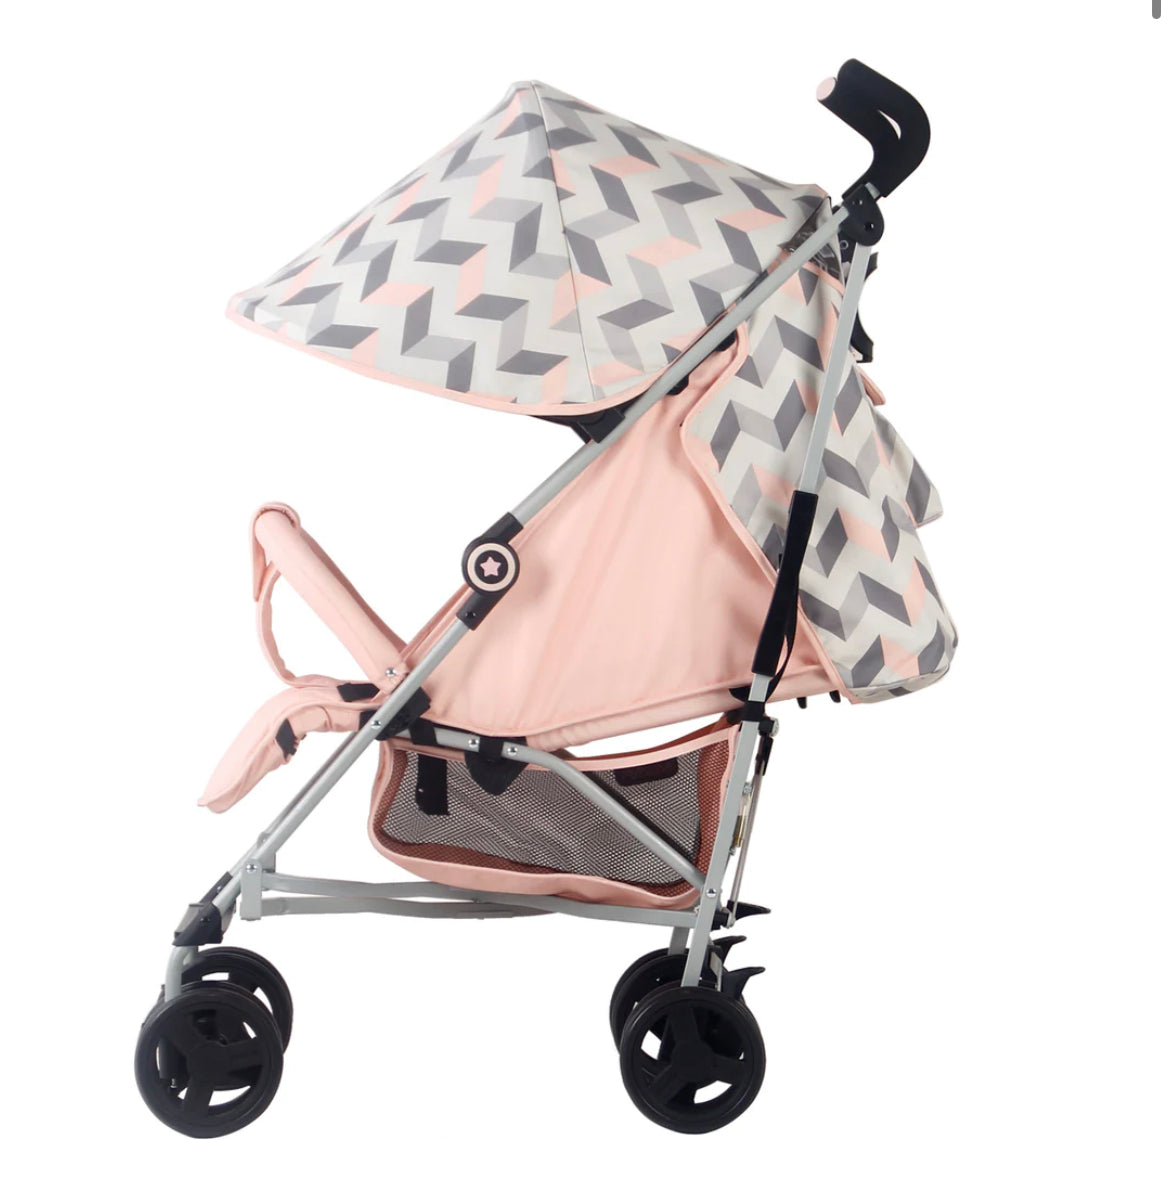 My Babiie - Billie Faiers pink chevron  MB02 Lightweight Stroller